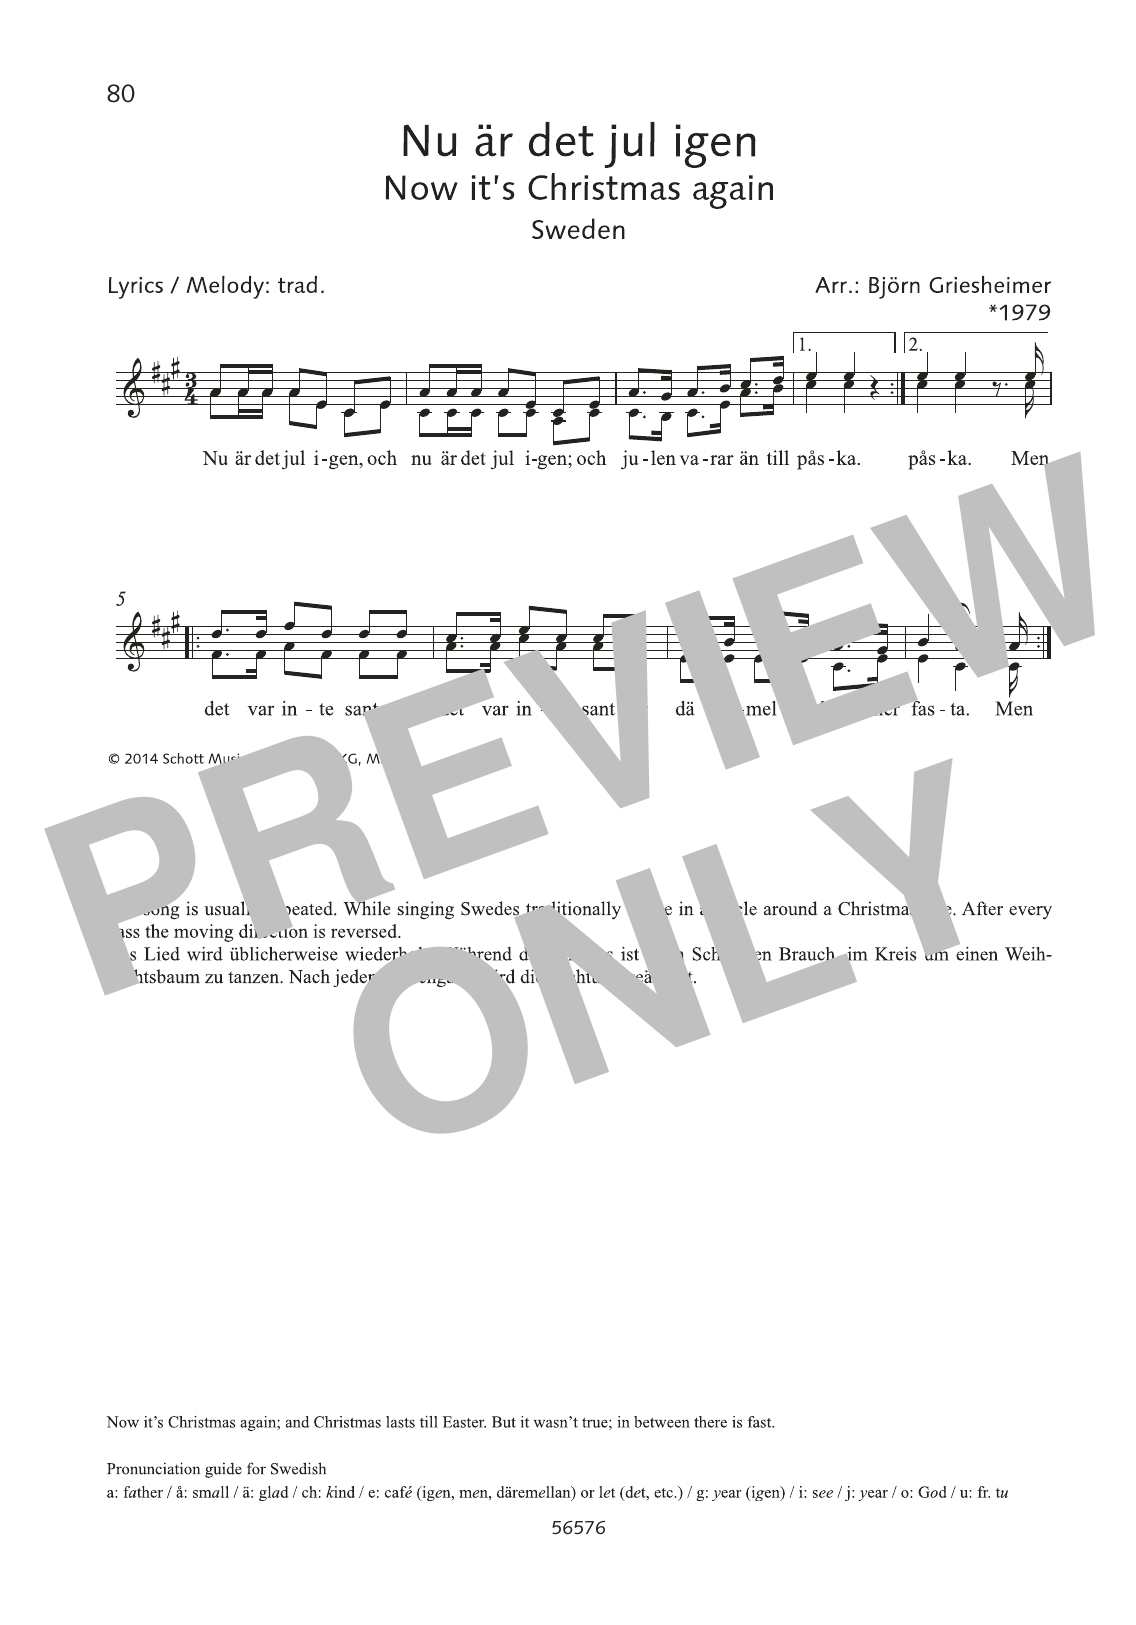 Download Björn Griesheimer Nu är det jul igen Sheet Music and learn how to play Choir PDF digital score in minutes